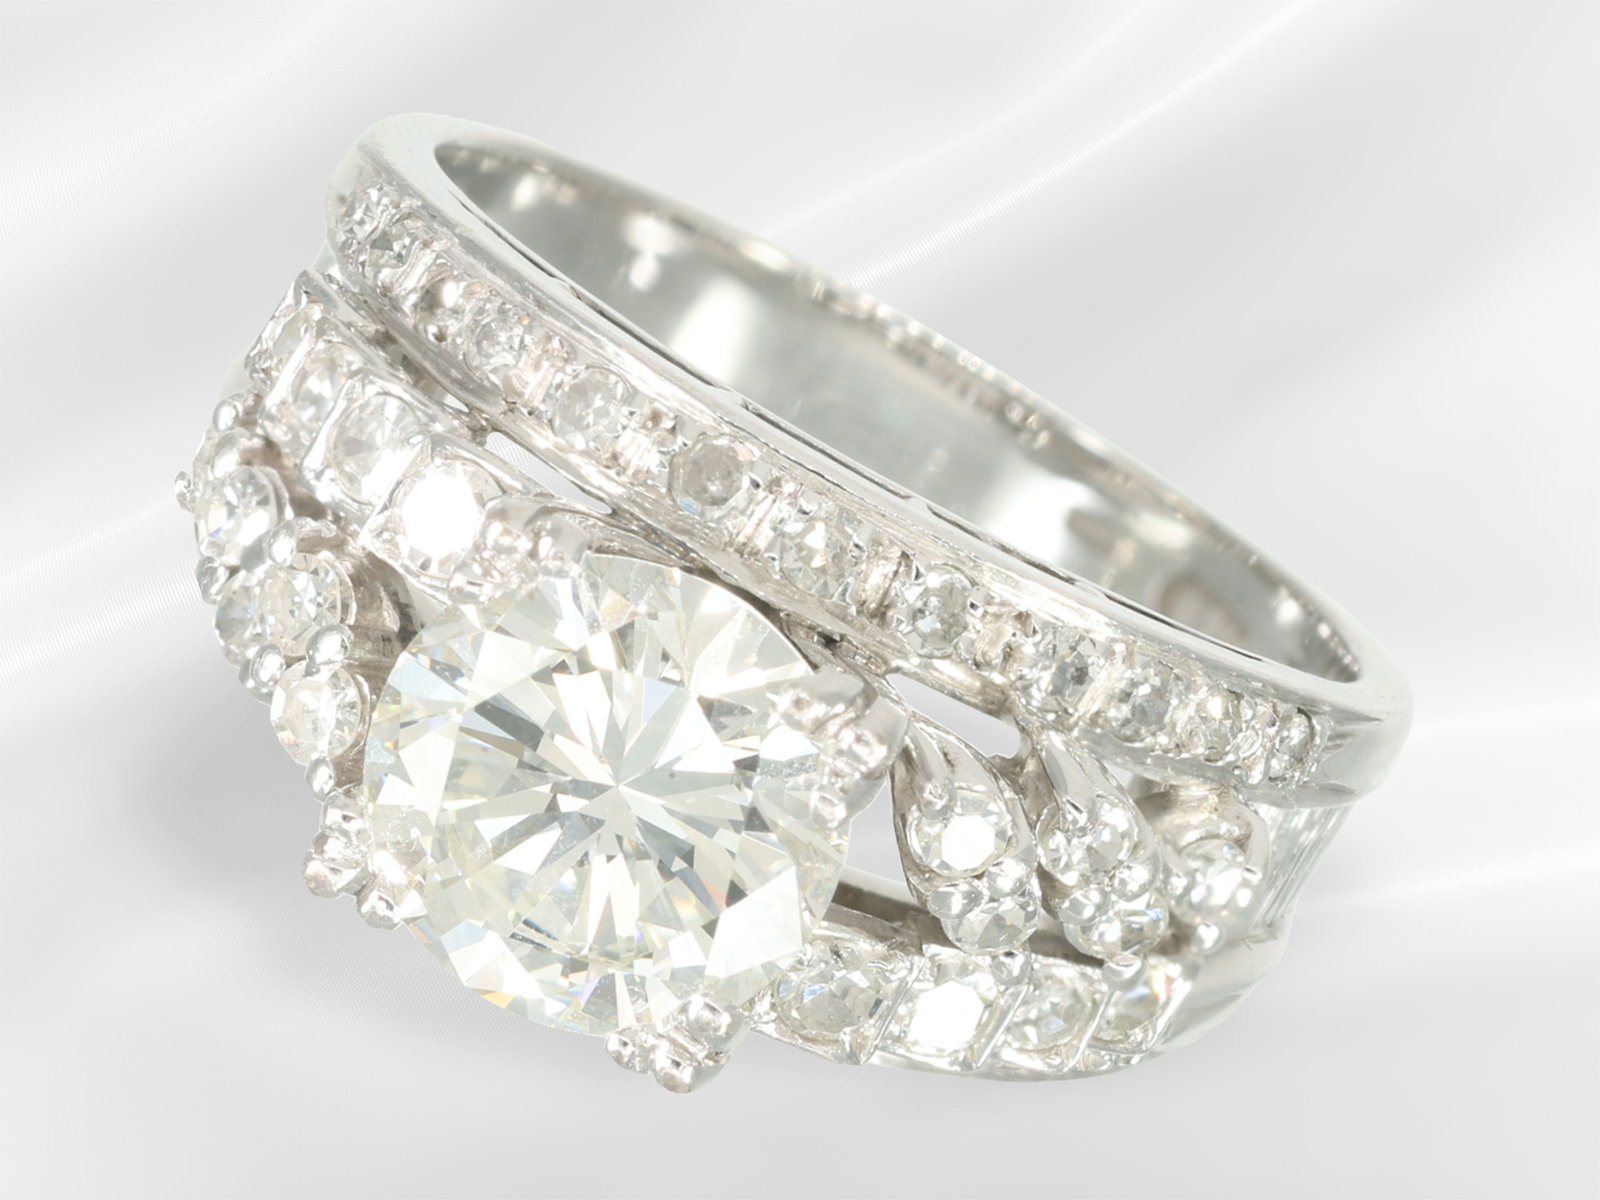 Ring: precious brilliant-cut diamond/diamond gold ring, large fine brilliant-cut diamond approx. 1.8